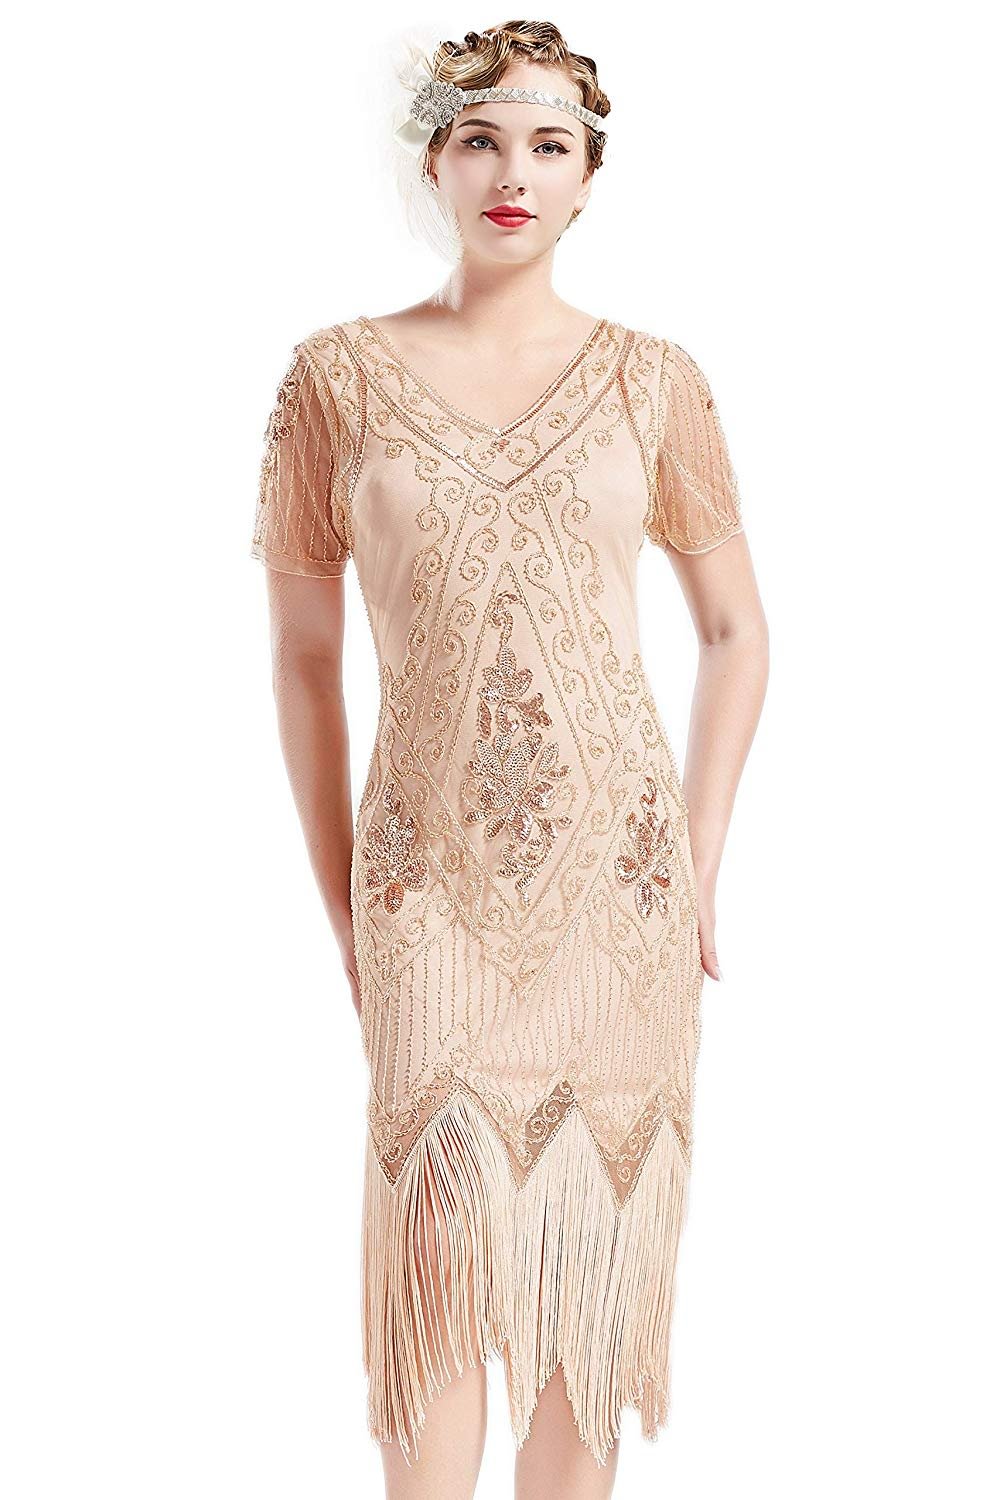 1920s Art Deco Fringed Sequin Dress 20s Flapper Gatsby Costume Dress